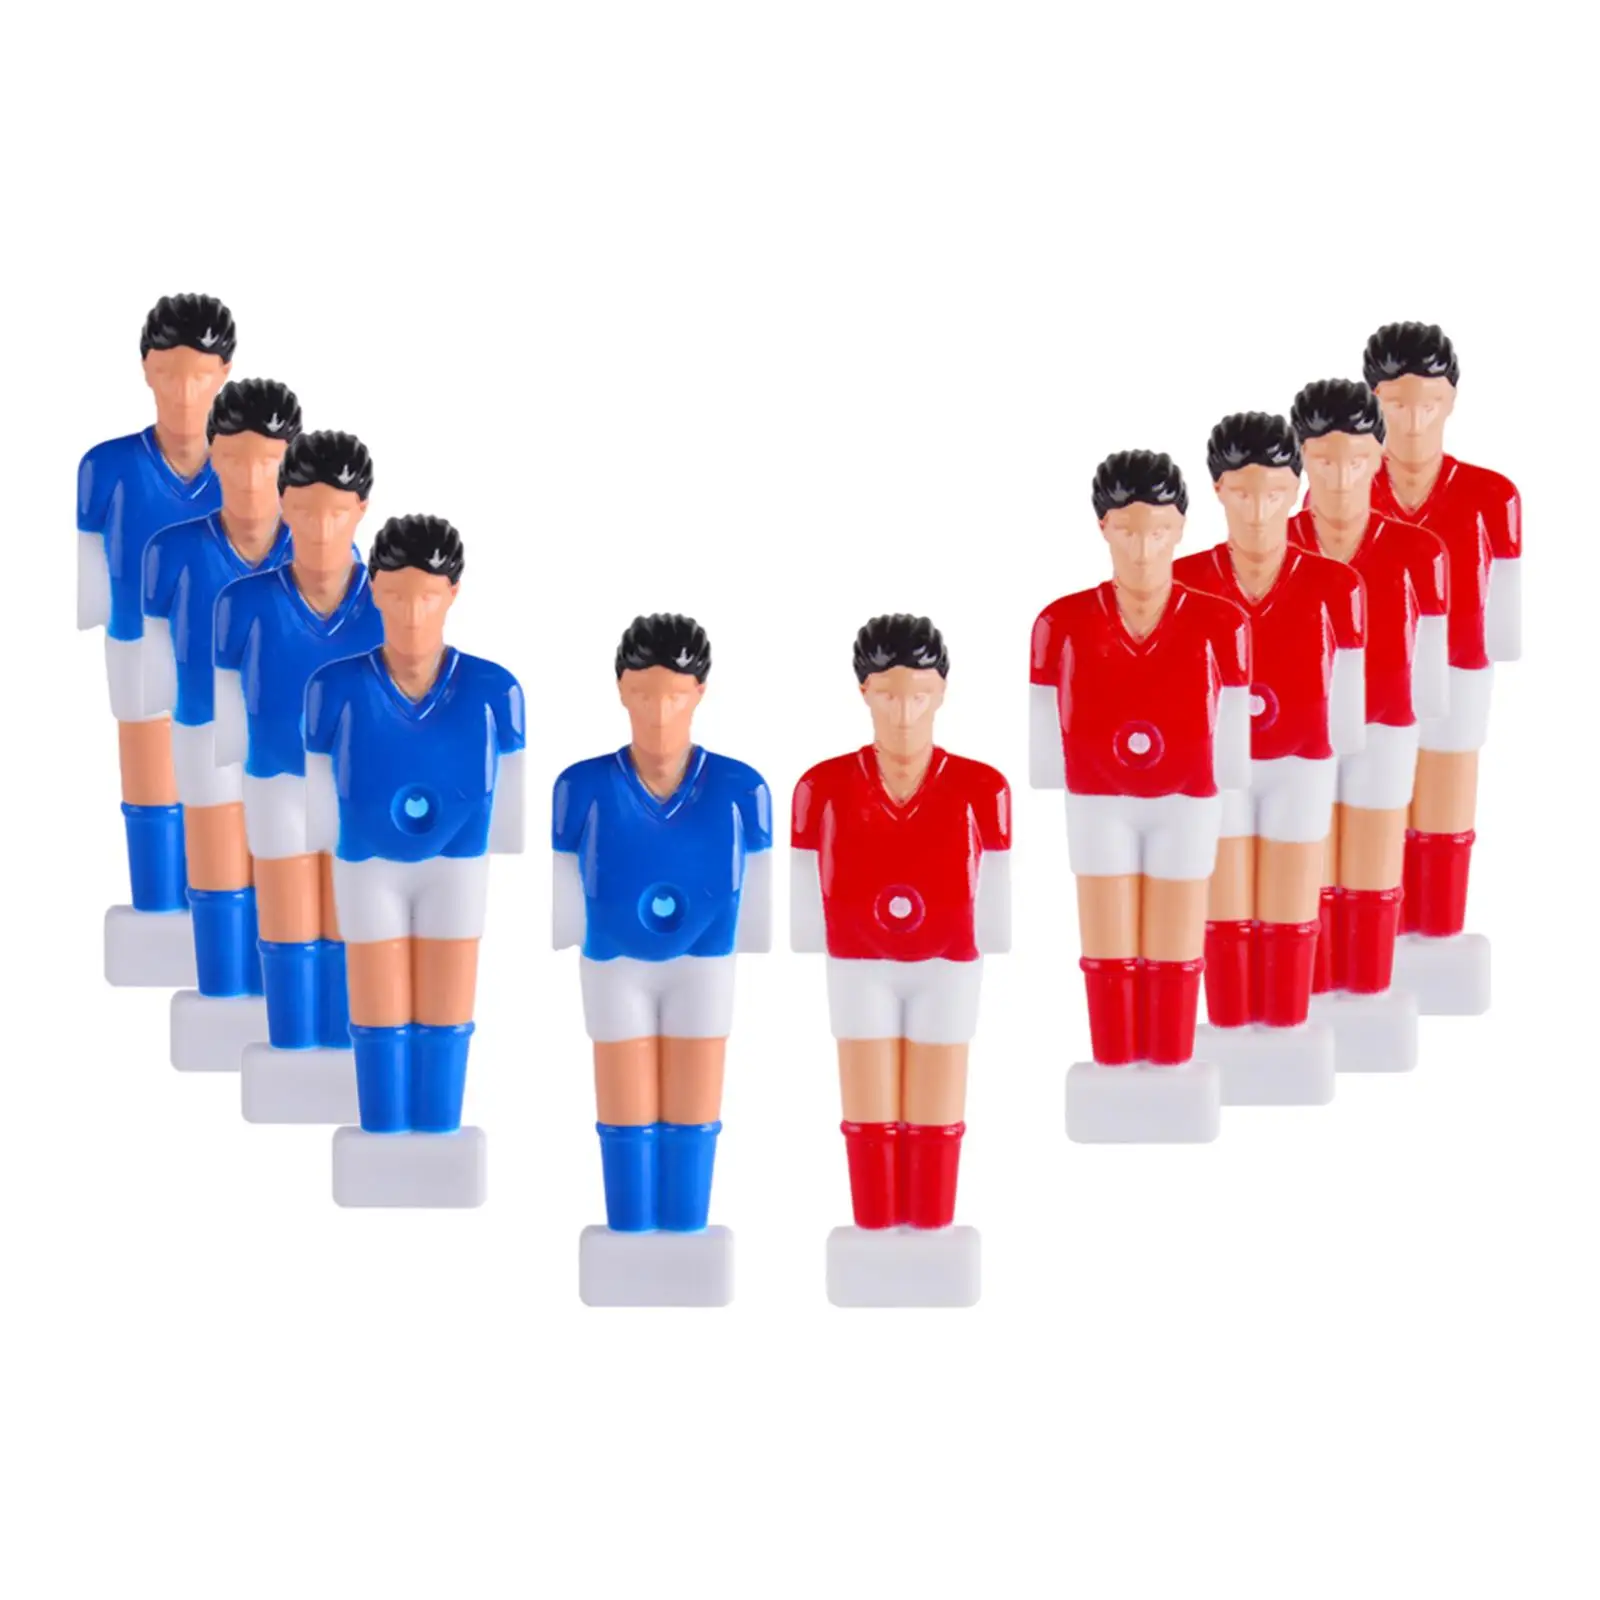 Foosball Player Soccer Games Mini Humanoid Doll Table Football Machine Accessory